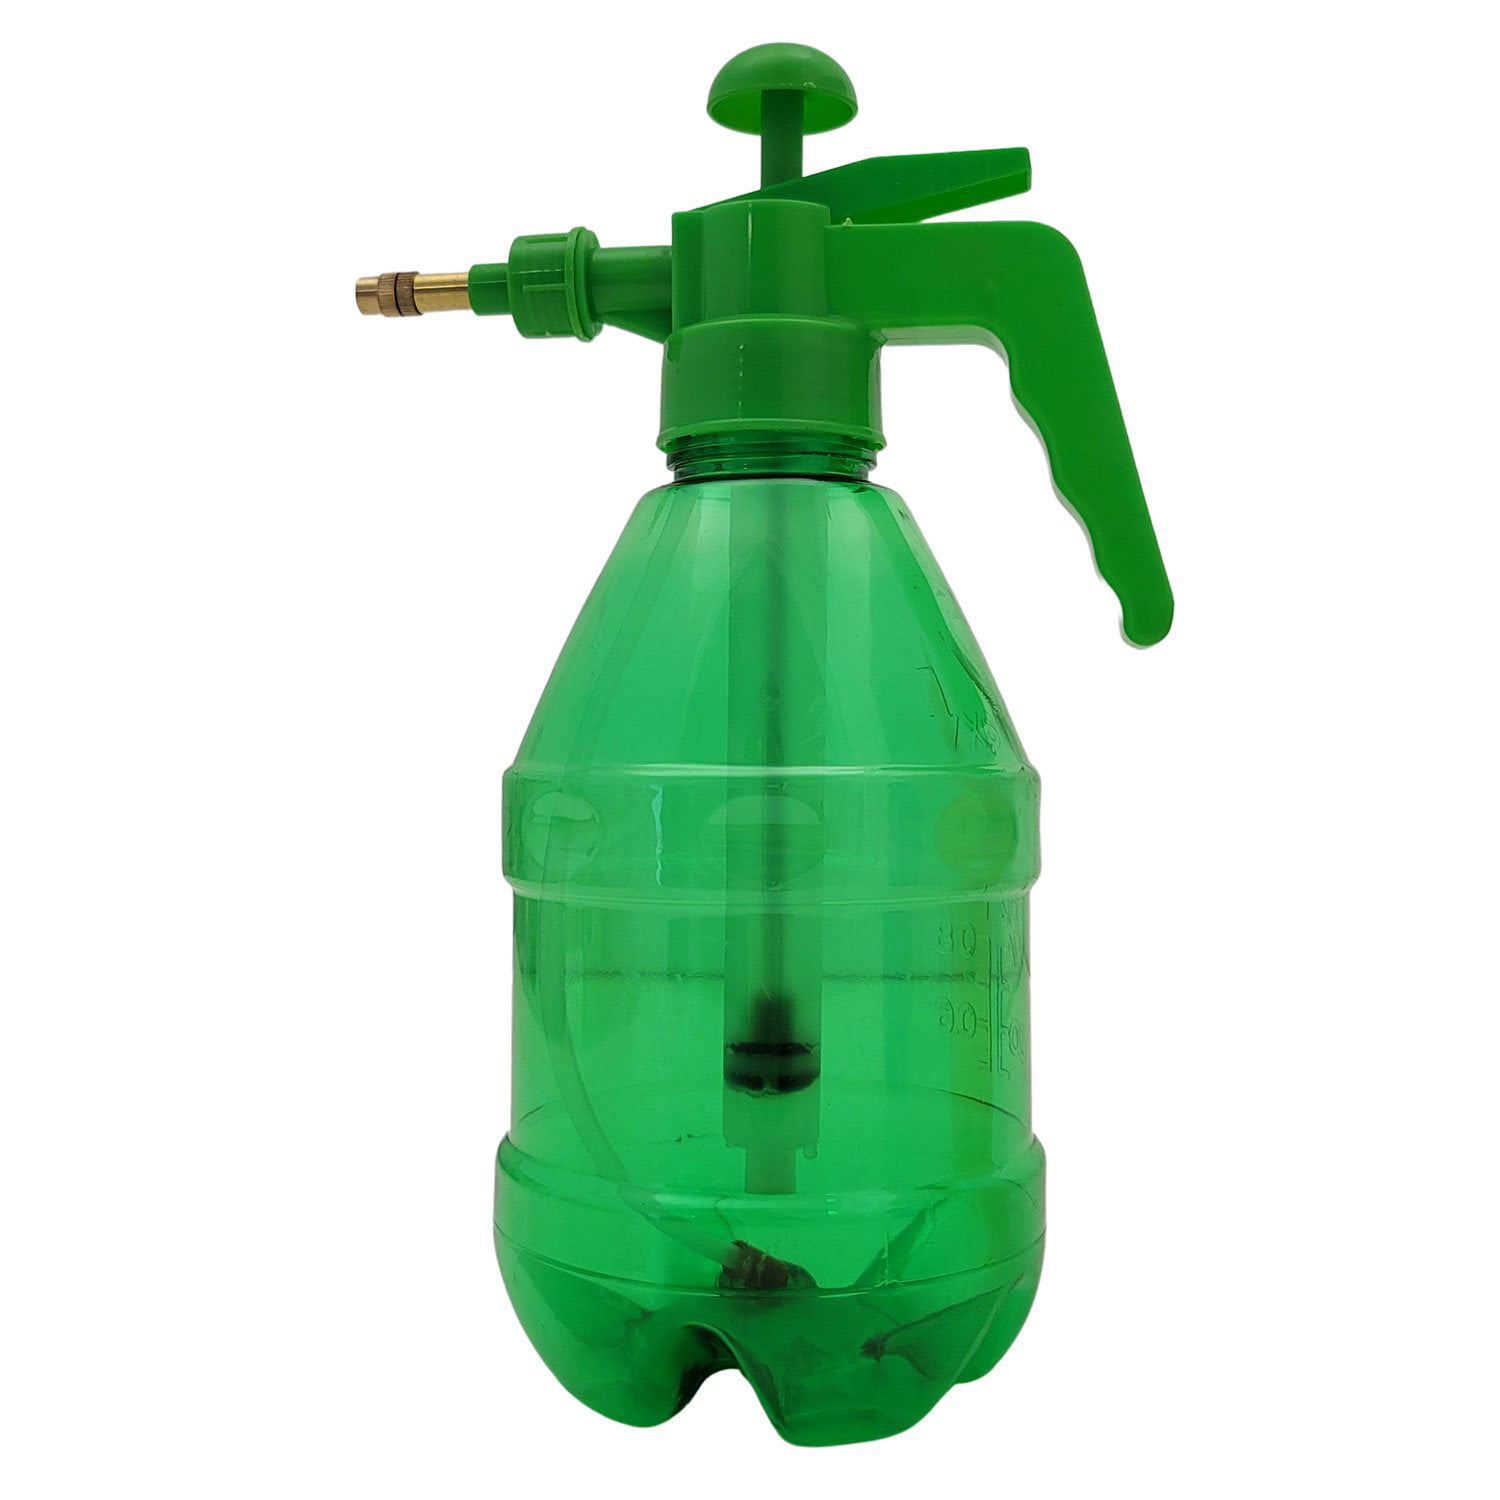  FOSHIO 0.53 Gallon Garden Pump Sprayer, 2L Portable Hand Pump  Pressure Water Spray Bottles with Adjustable Nozzle Trigger Lock Sprayer  for Home, Lawn and Car Detailing : Patio, Lawn & Garden